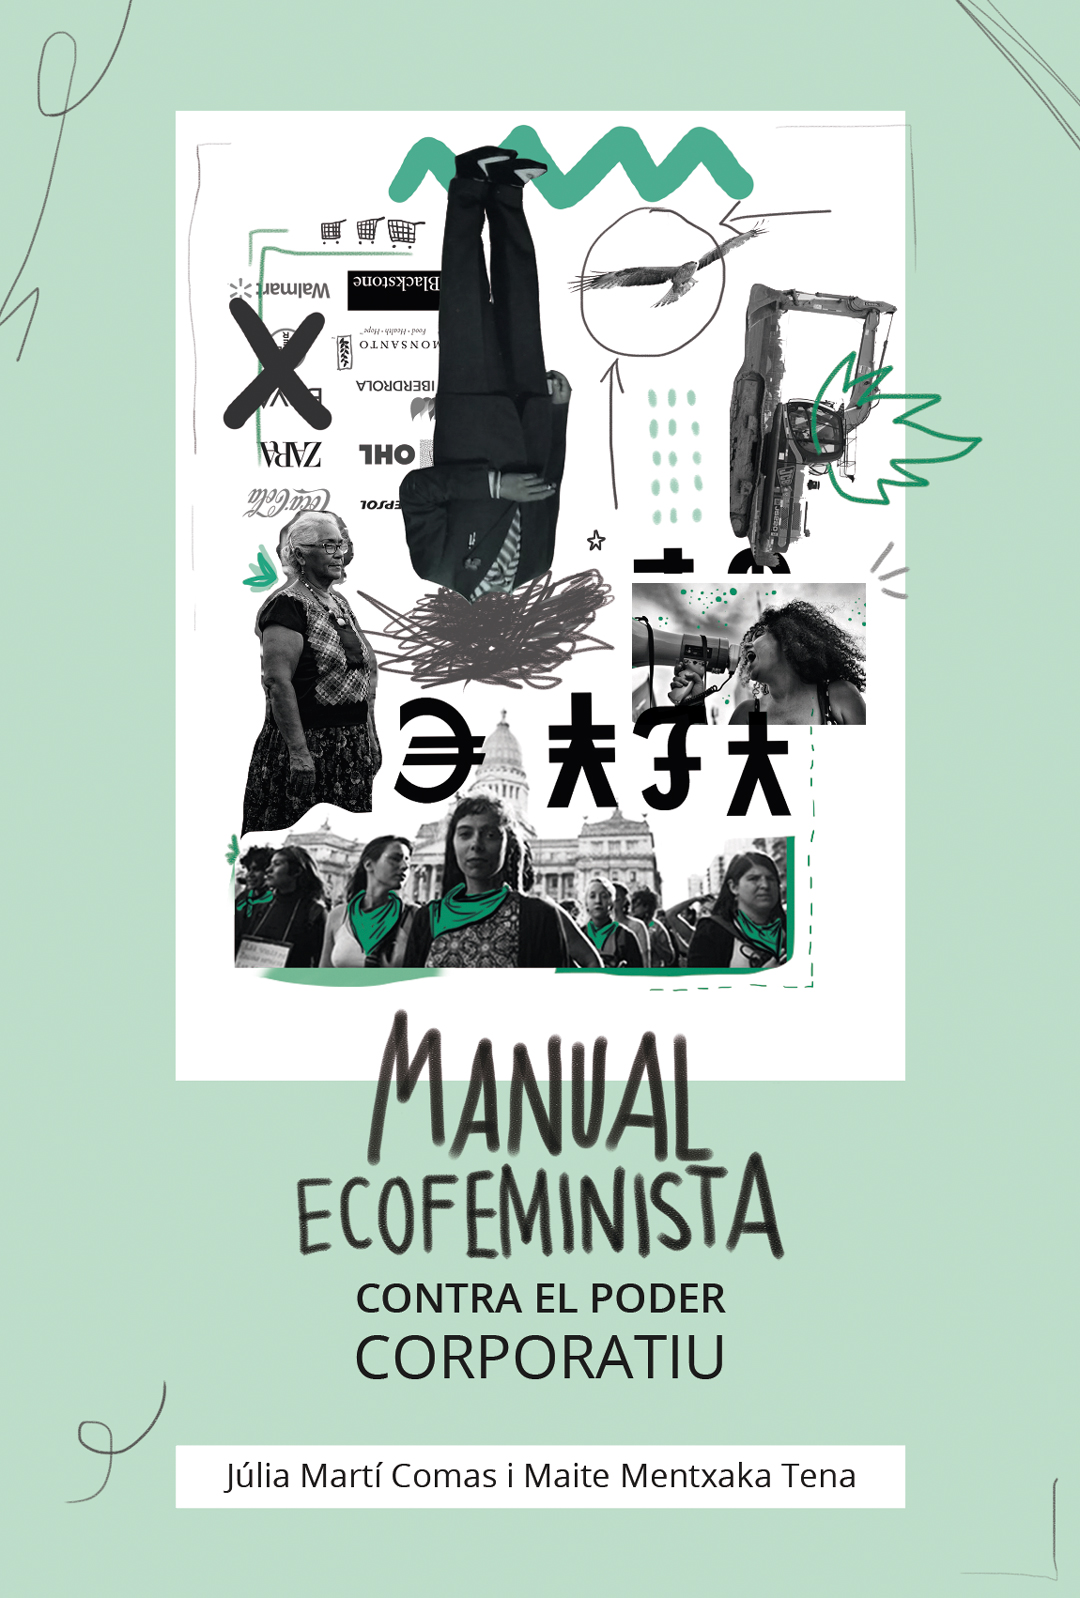 Manual ecofeminista contra el poder corporatiu - Júlia Martí Comas | Maite Mentxaca Tena